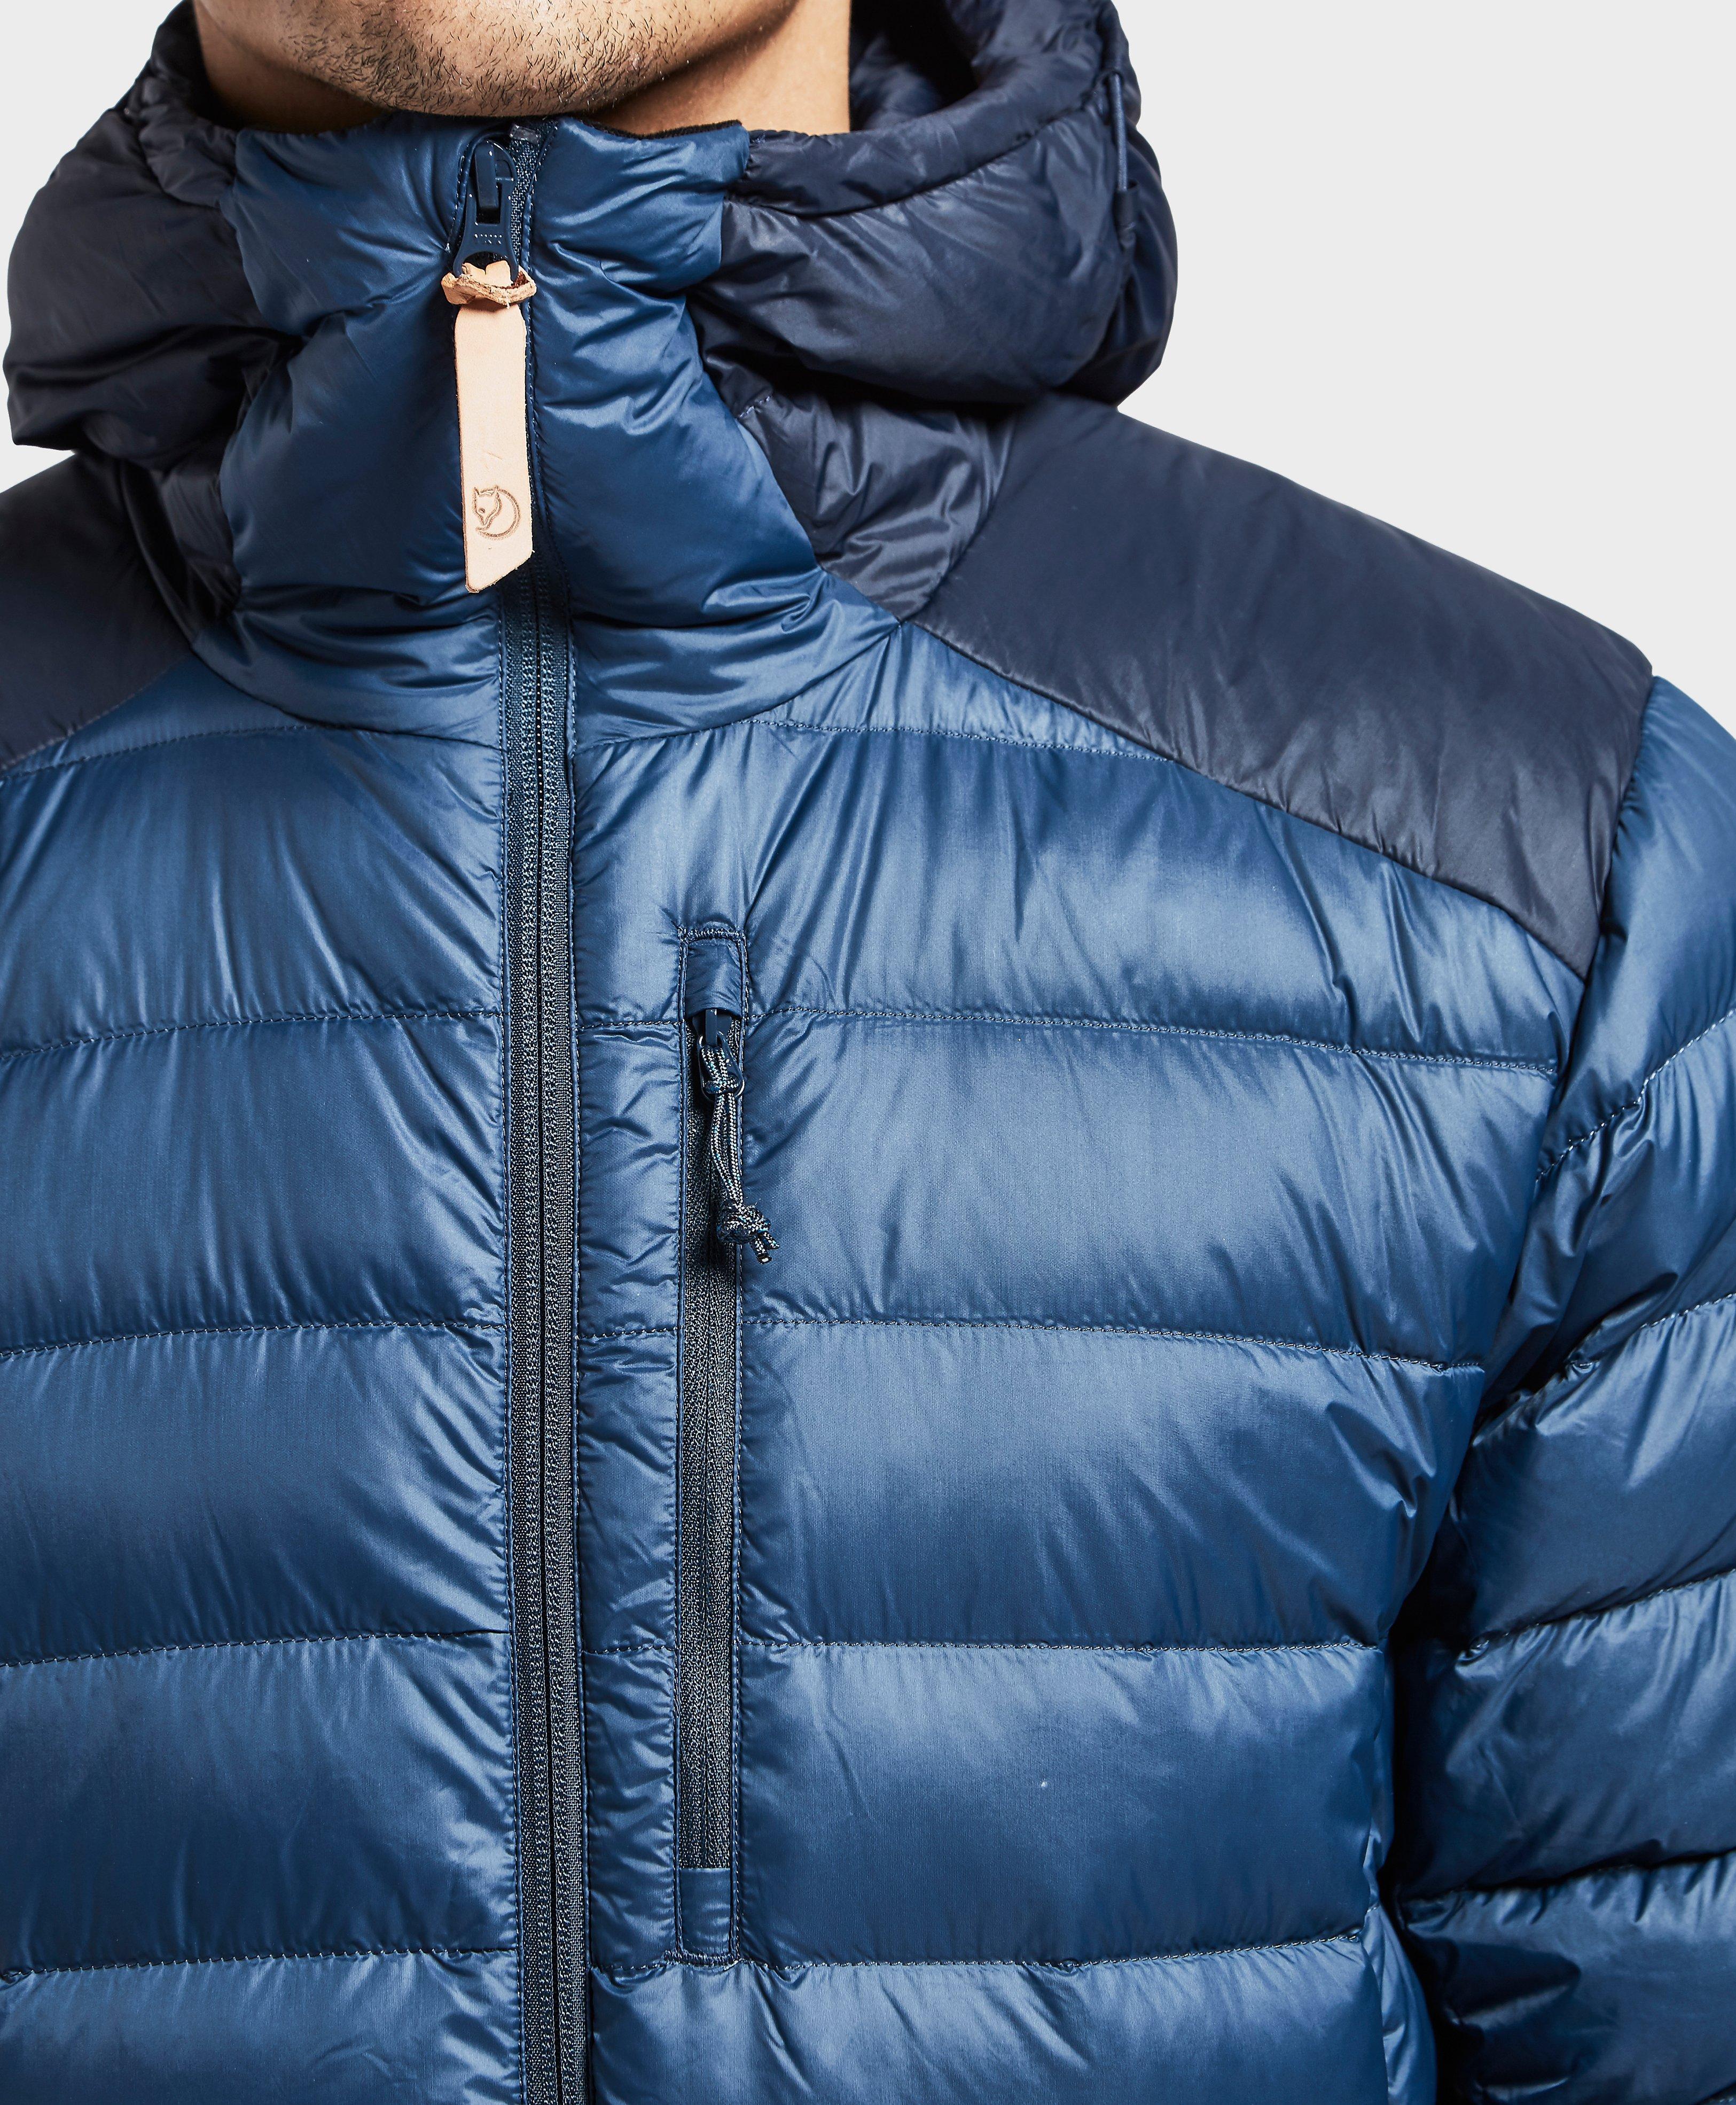 Lyst - Fjallraven Keb Touring Jacket in Blue for Men